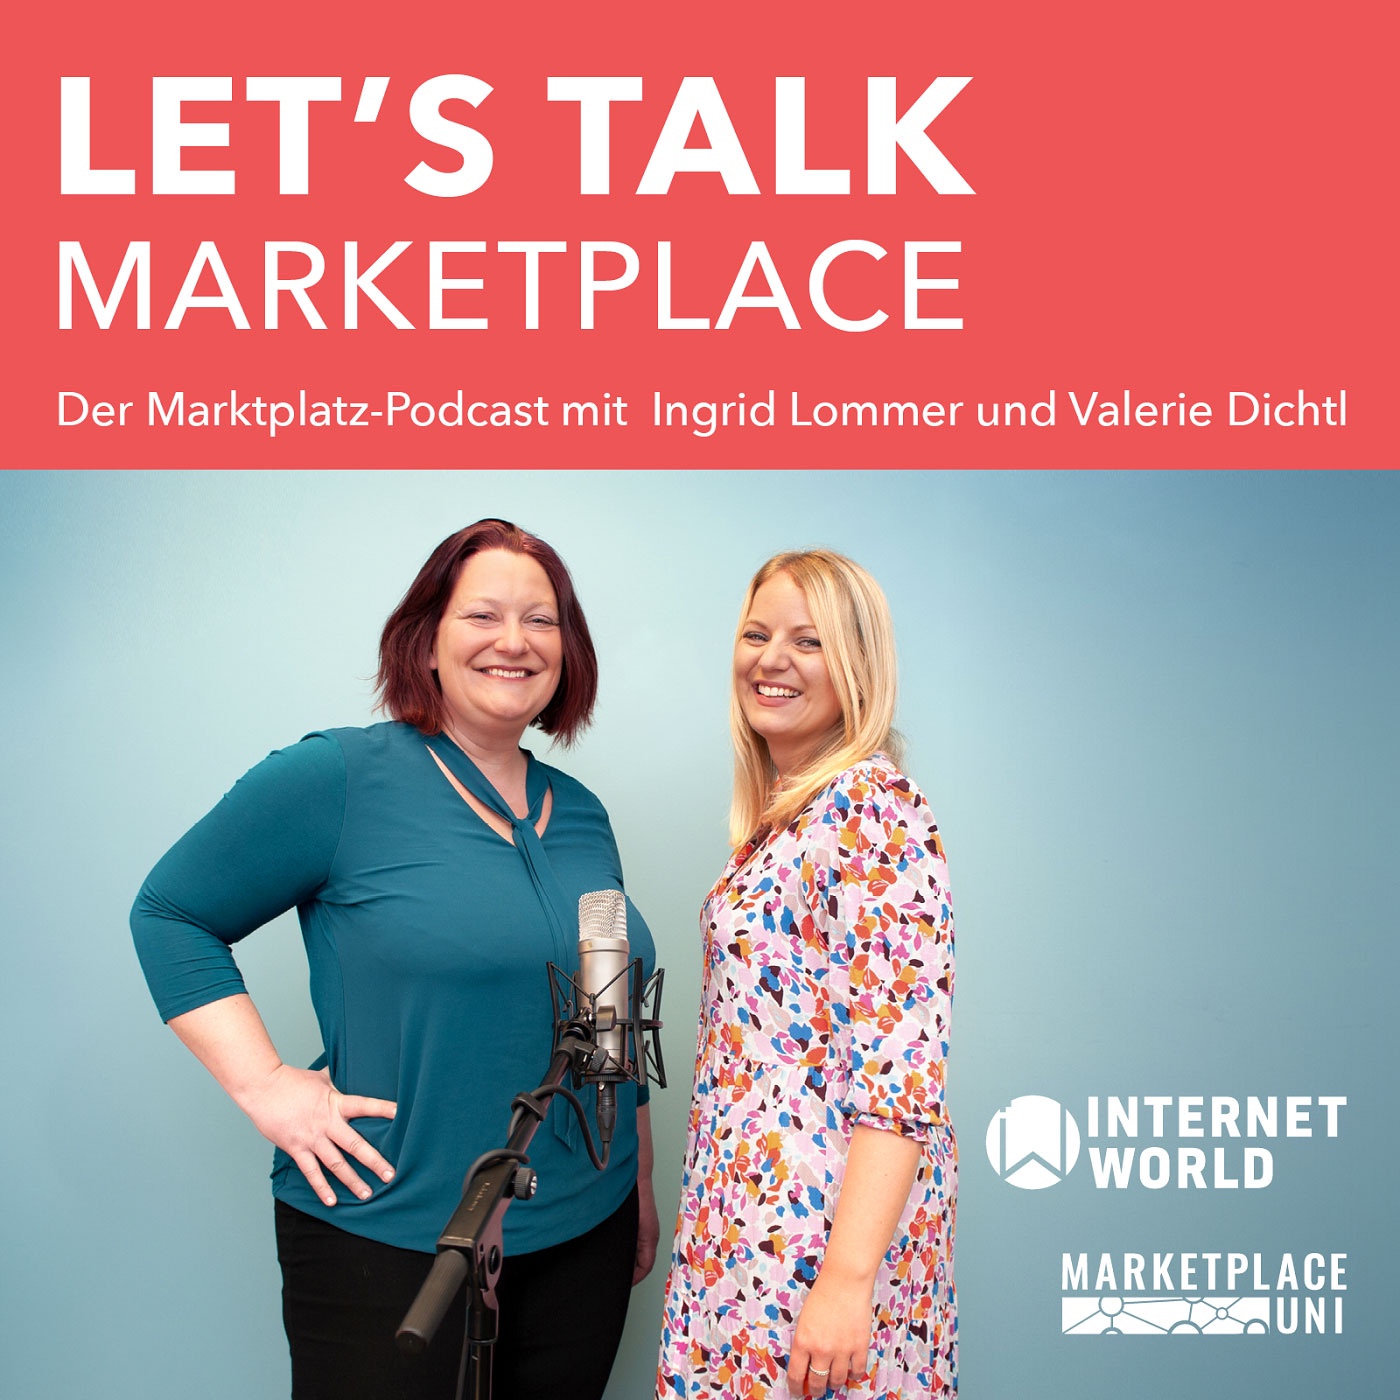 Let's talk Marketplace